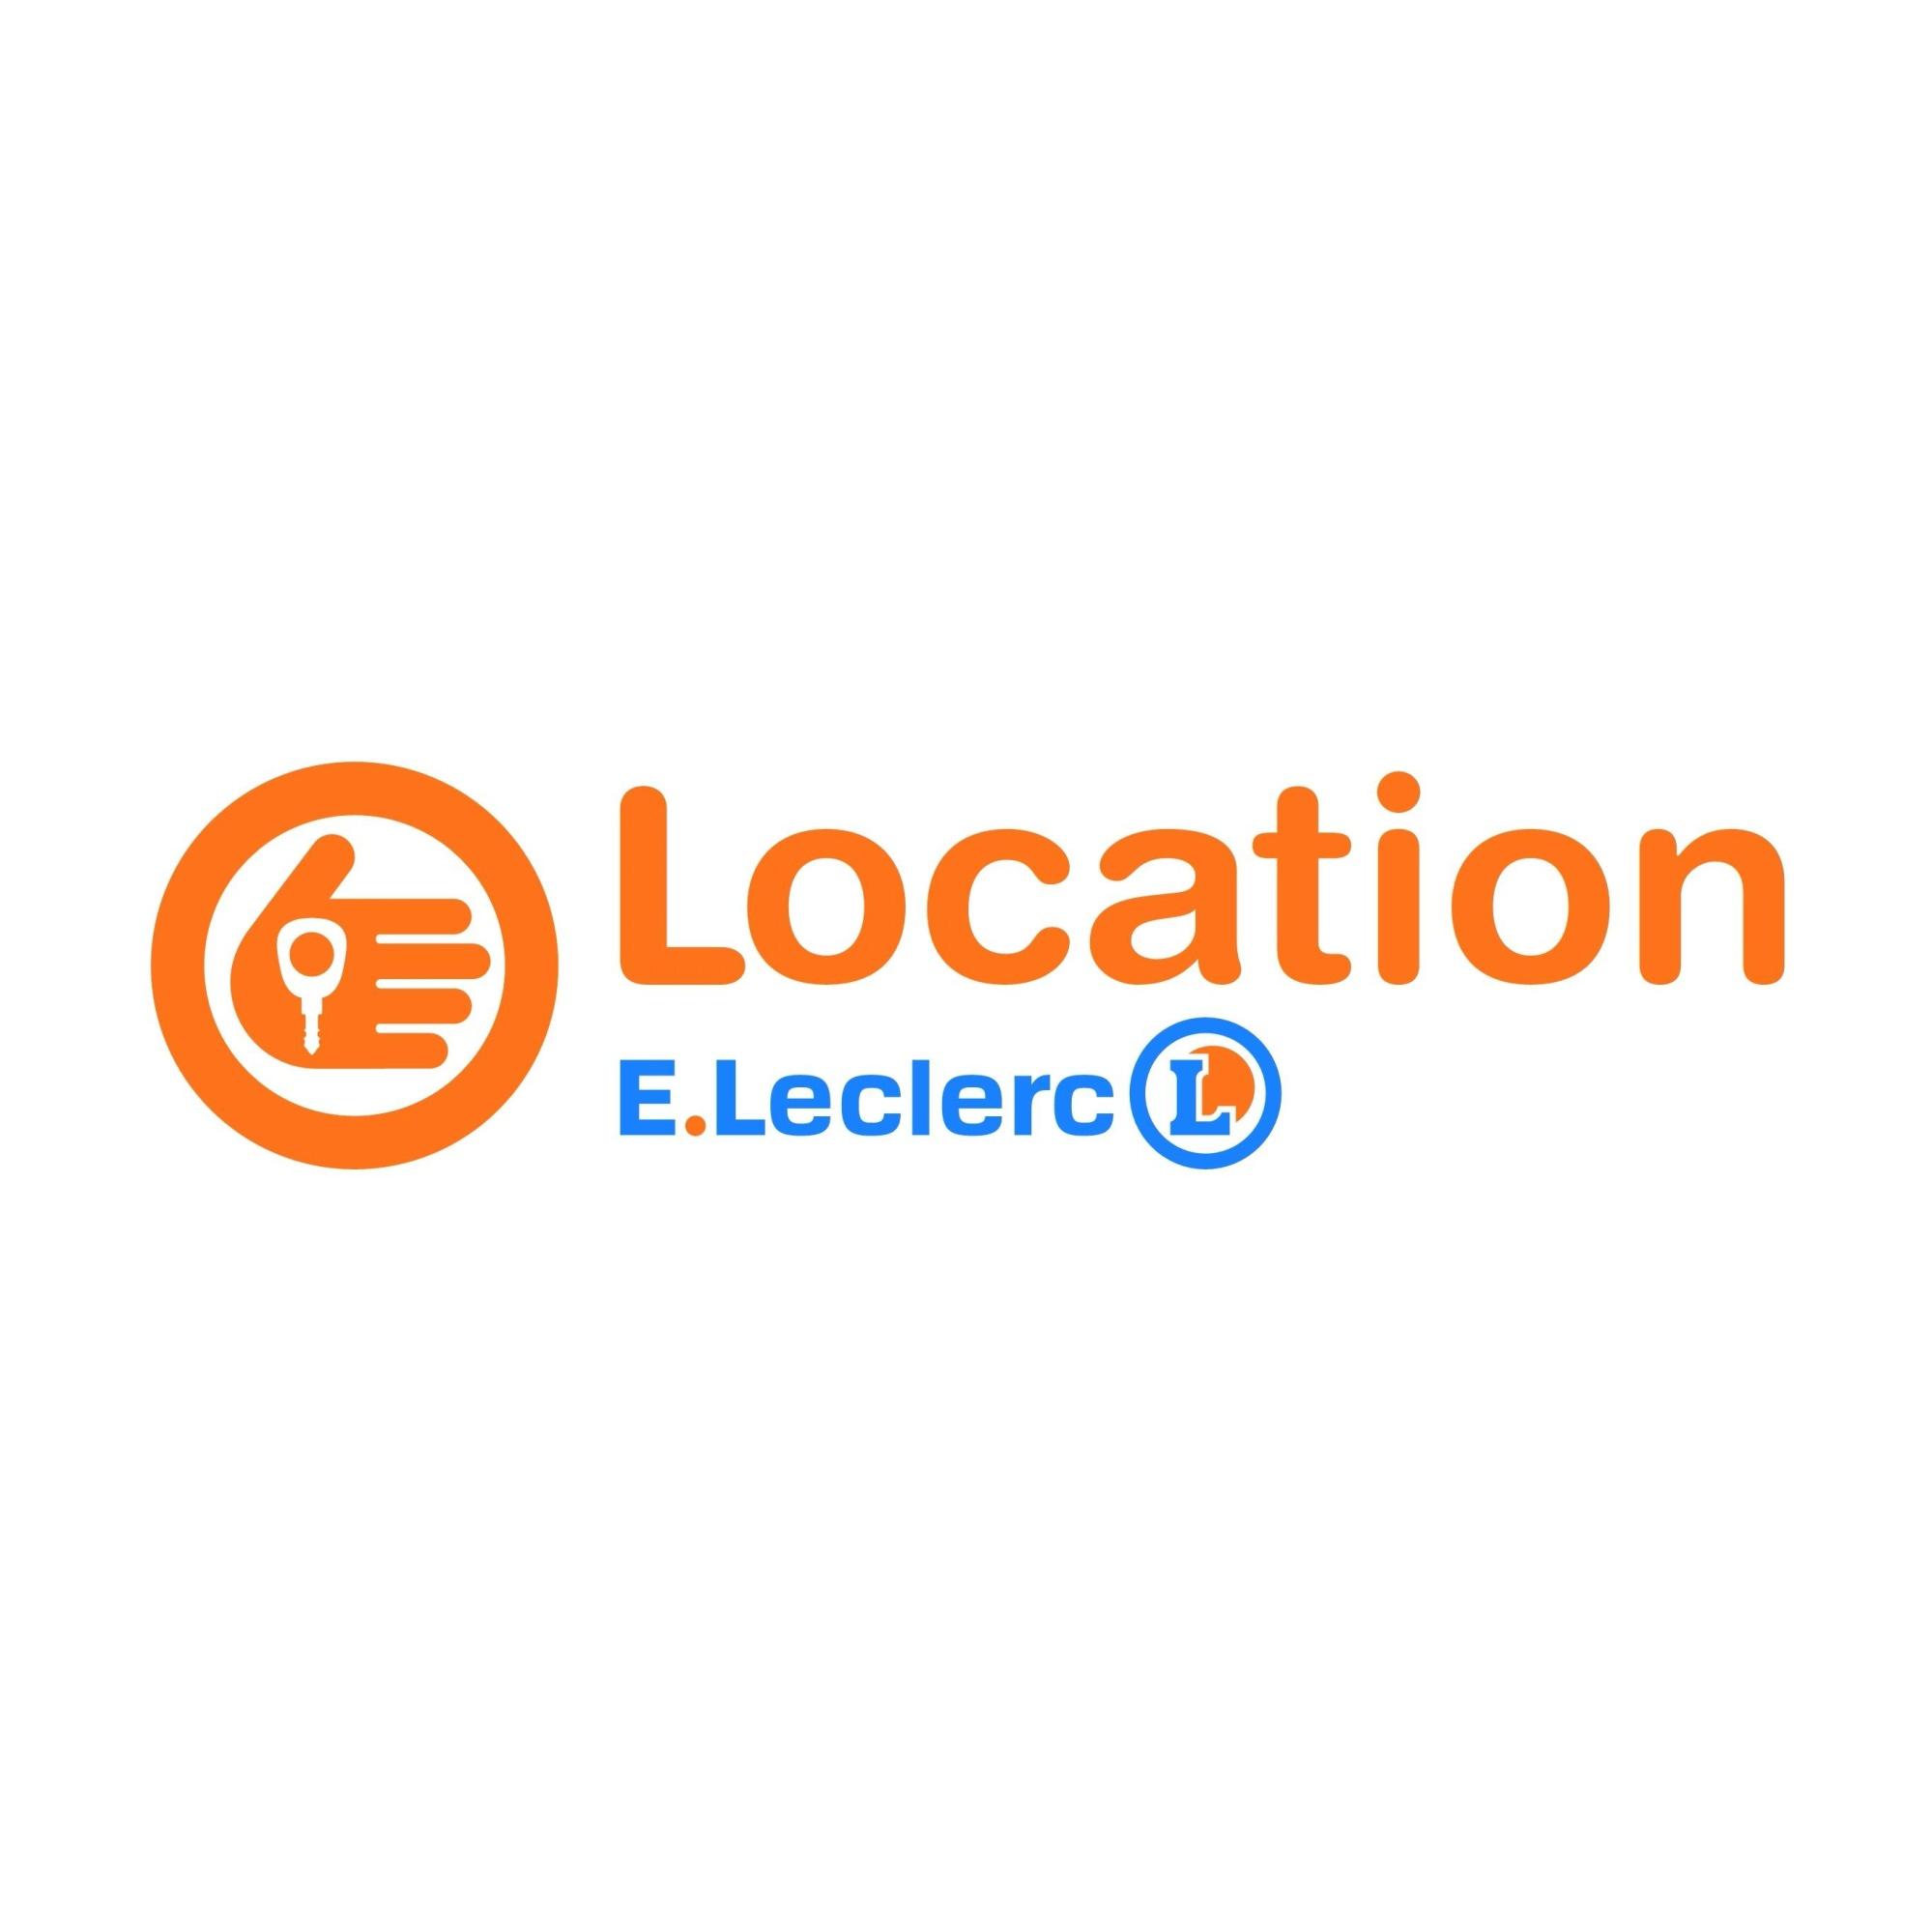 E.leclerc Location Montauban